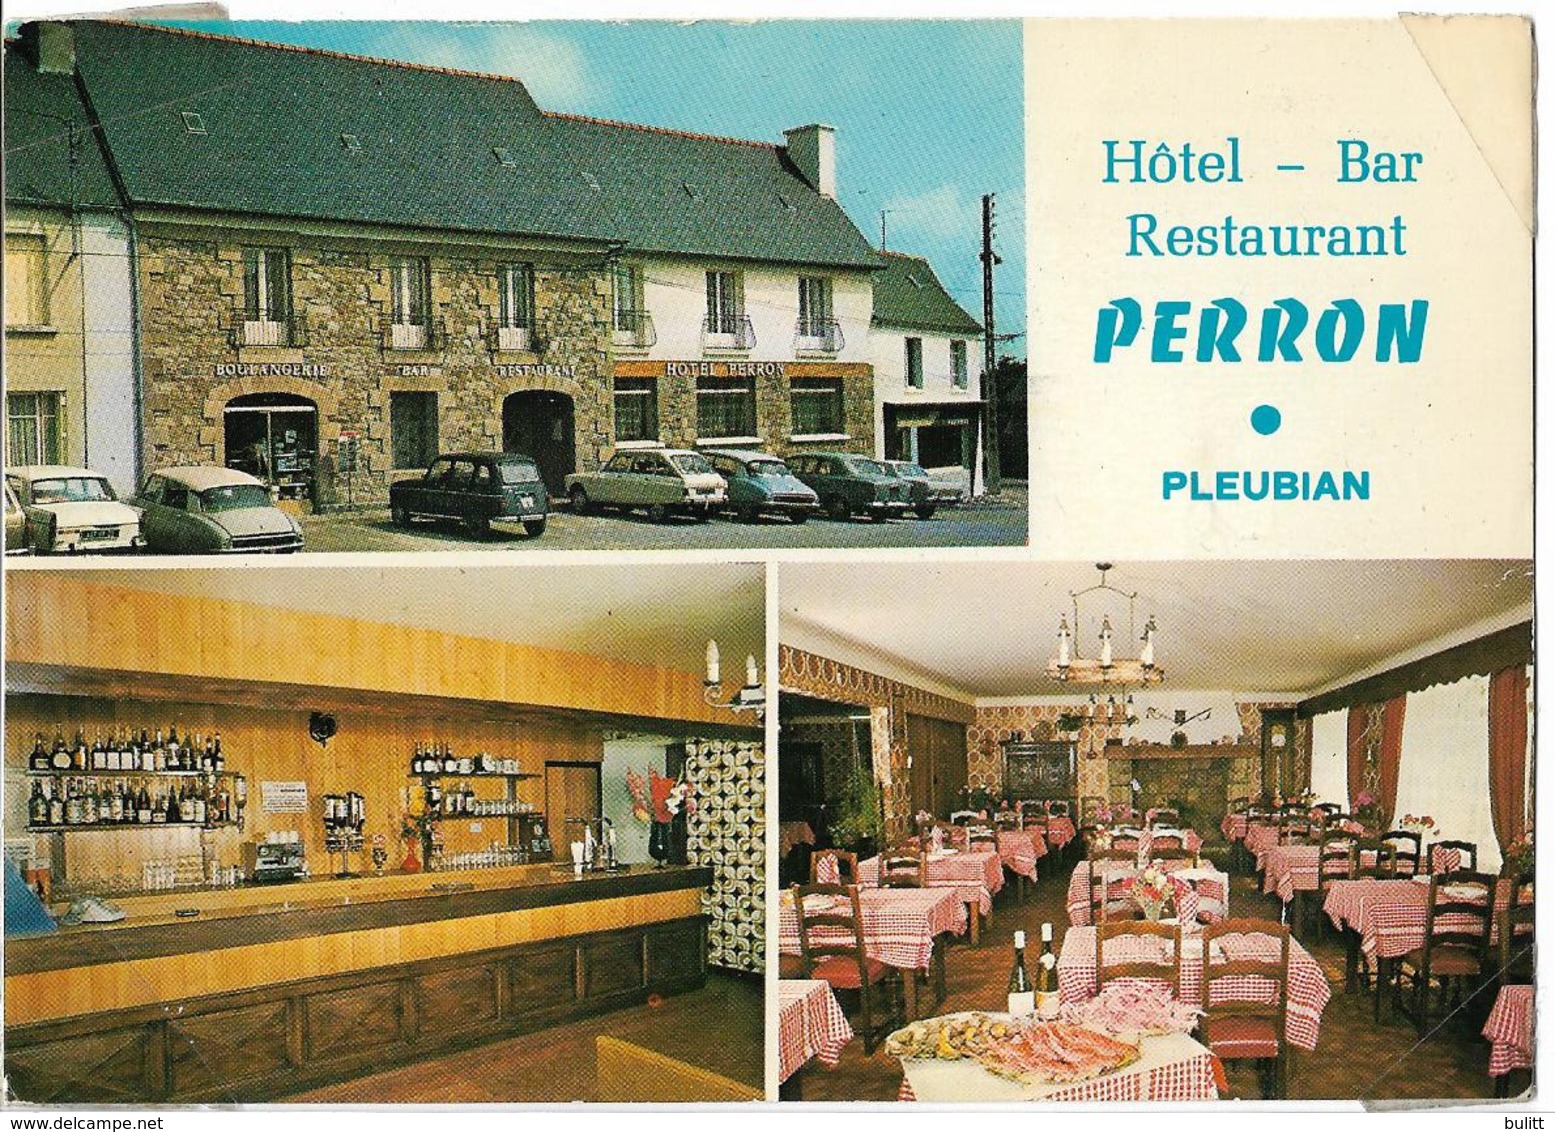 PLEUBIAN - Hôtel - Bar - Restaurant PERRON - Vues - Voiture : Citroen DS - Peugeot 403 - 404 - Renautl 4L - Pleubian